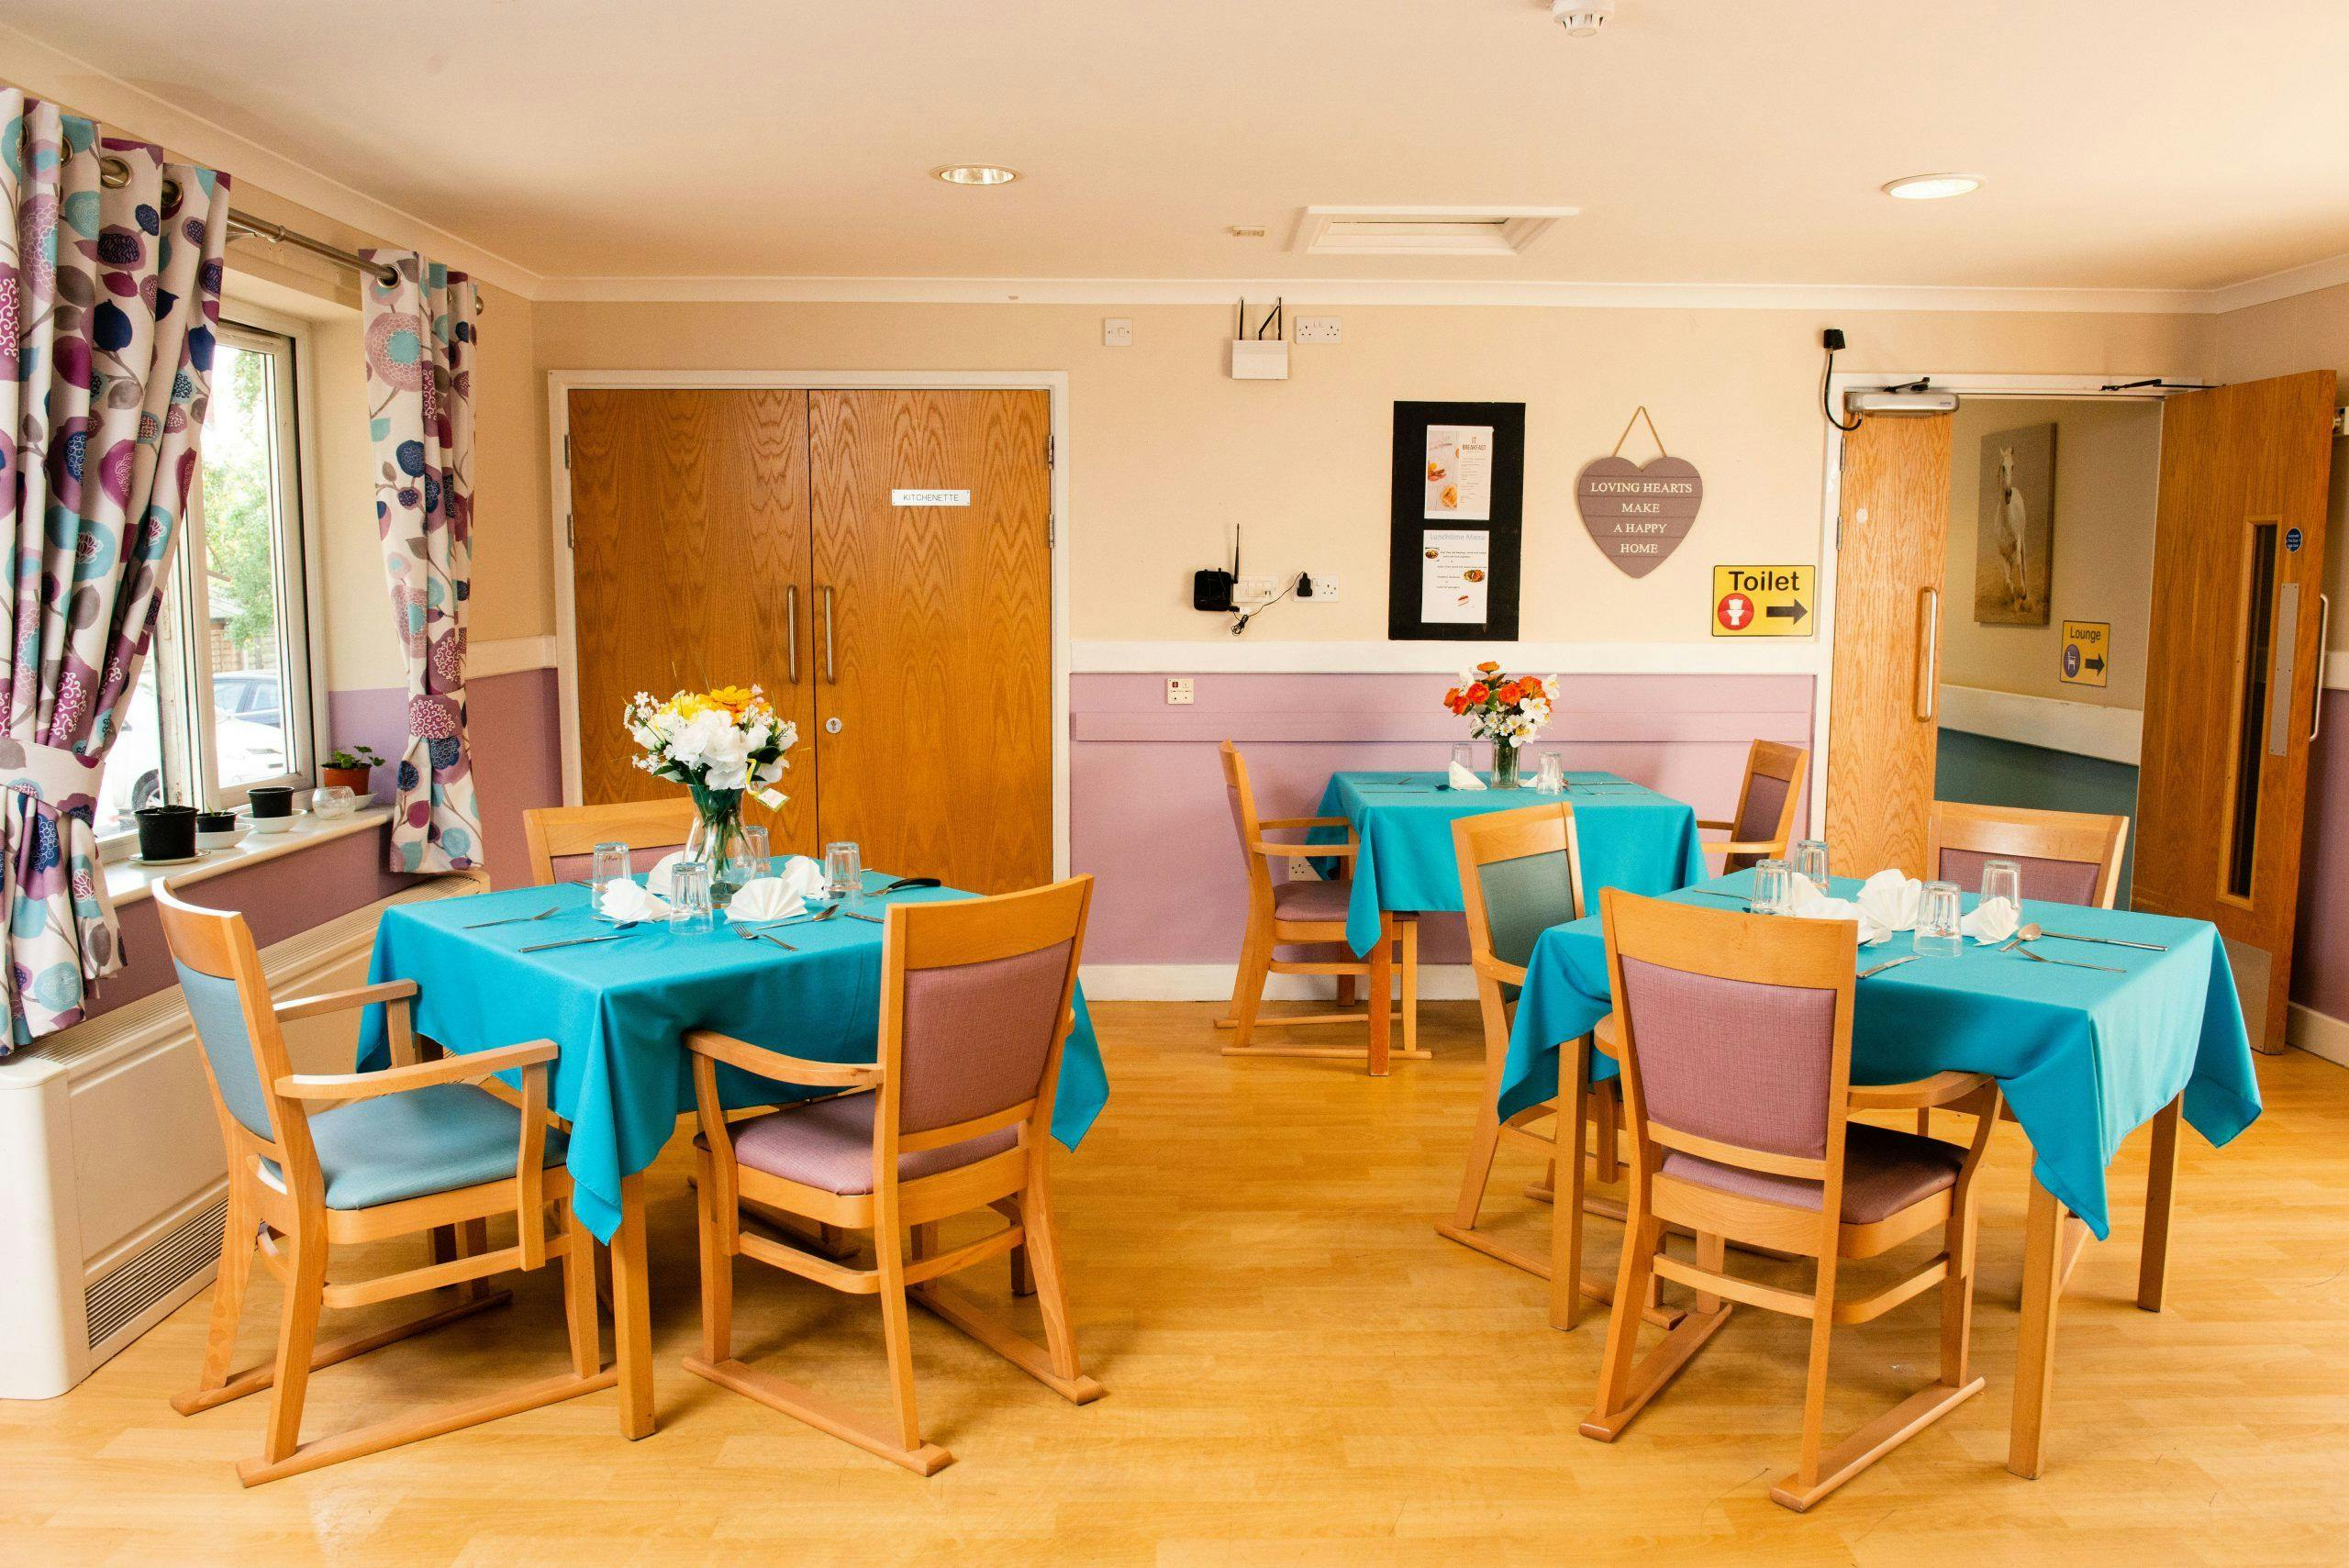 Dining area of West Hallam Care Home in Ilkeston, Derbyshire